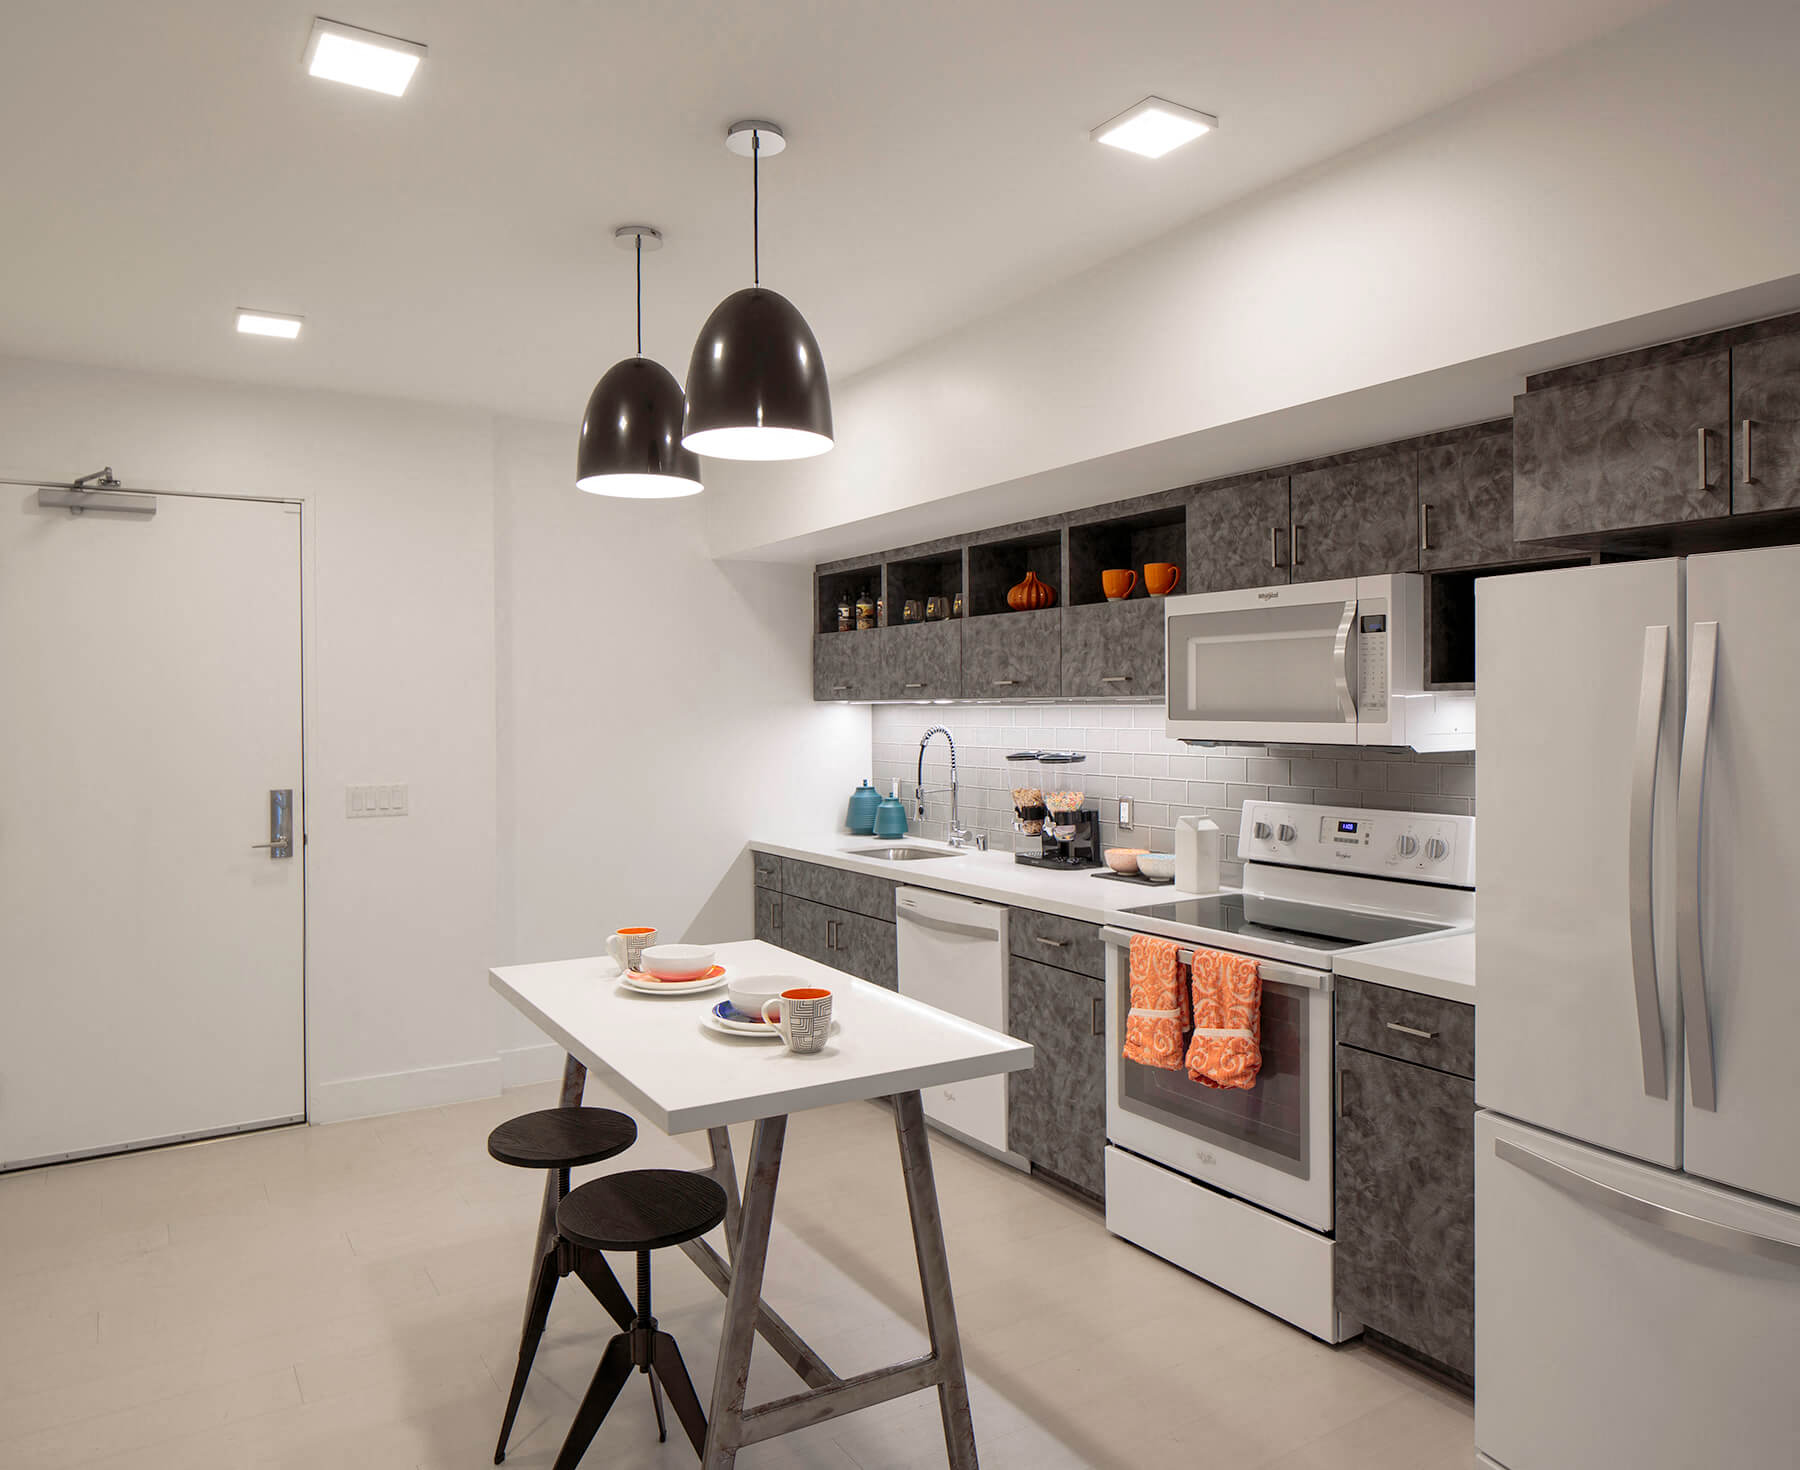 A sleek, modern kitchen at the Idea1 Apartments in San Diego, California.